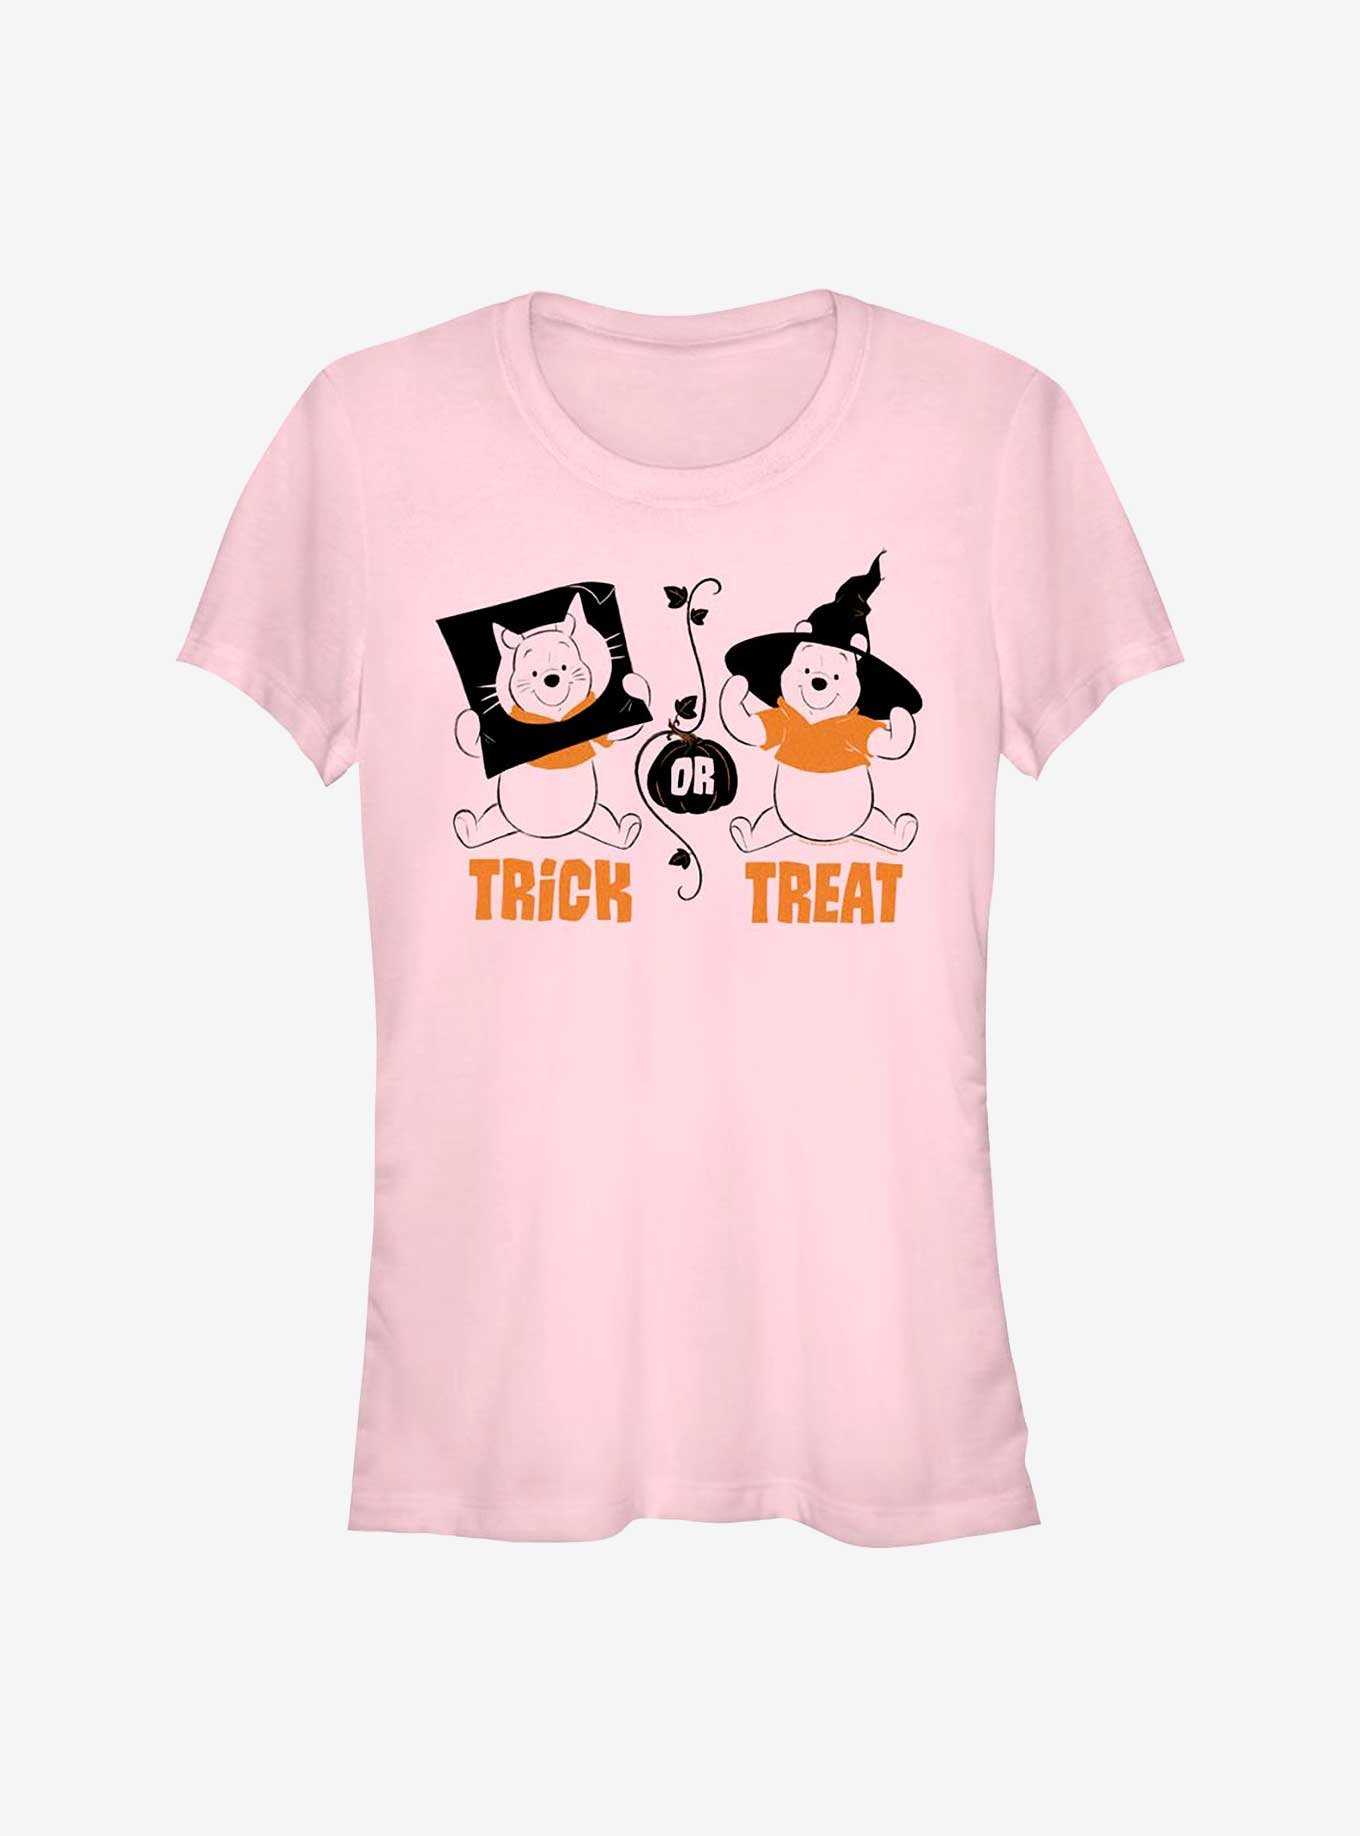 Disney Winnie The Pooh Impoohstor Trick or Treat Girls T-Shirt, , hi-res